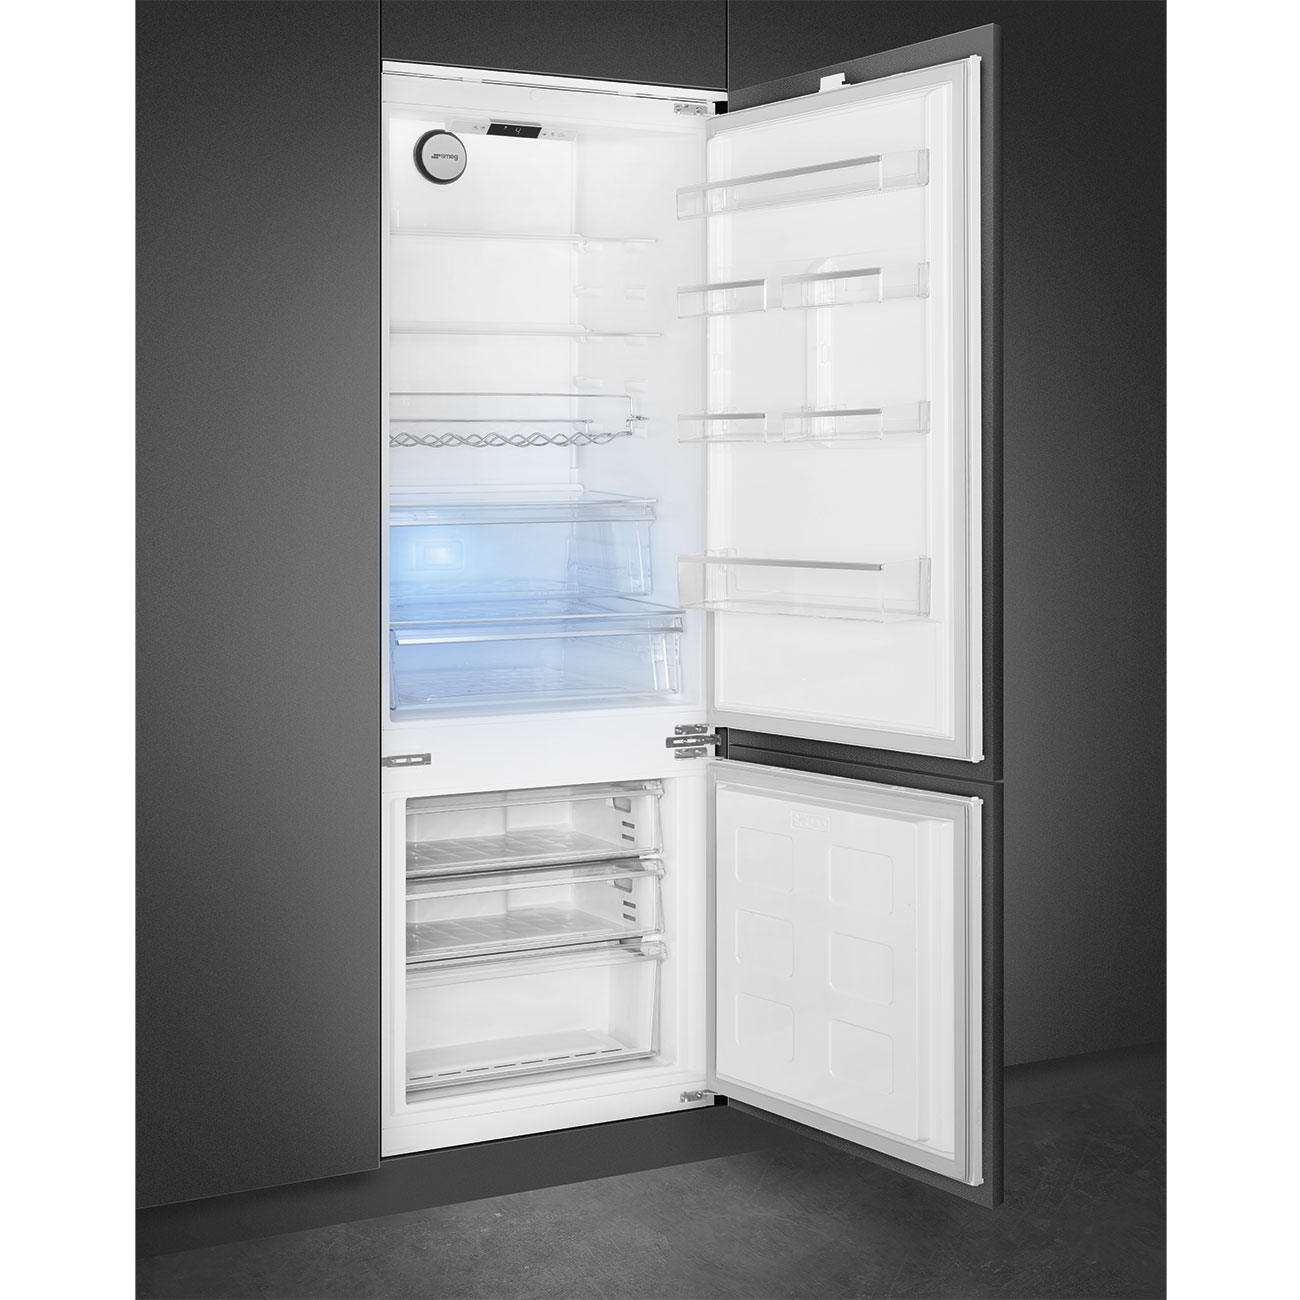 Bottom Mount Built-in refrigerator - Smeg_2